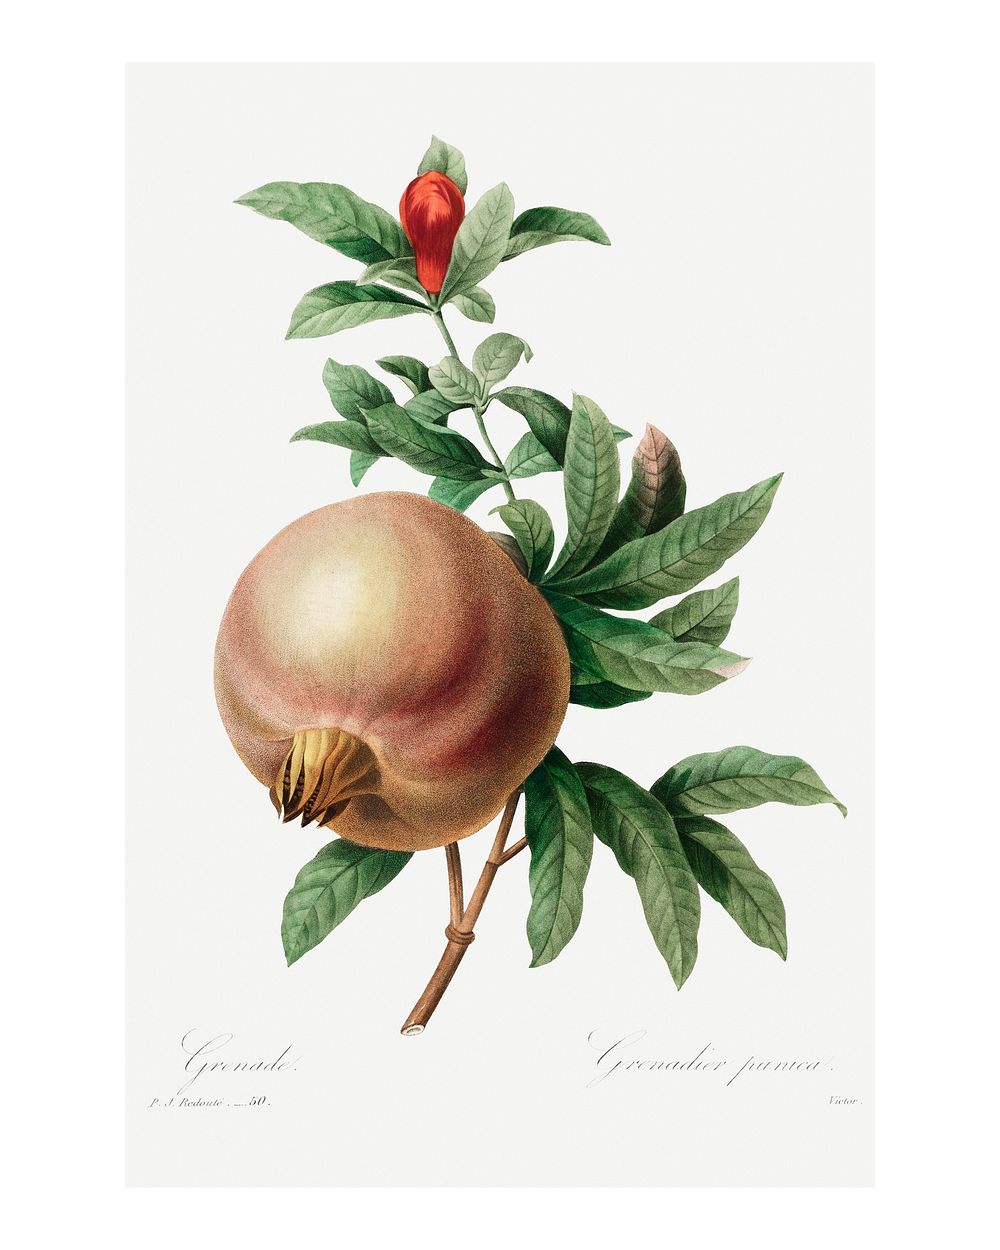 Pomegranate wall art print and poster. Original from Choix des plus belles fleurs plus beaux fruits: Grenade (1827) by…